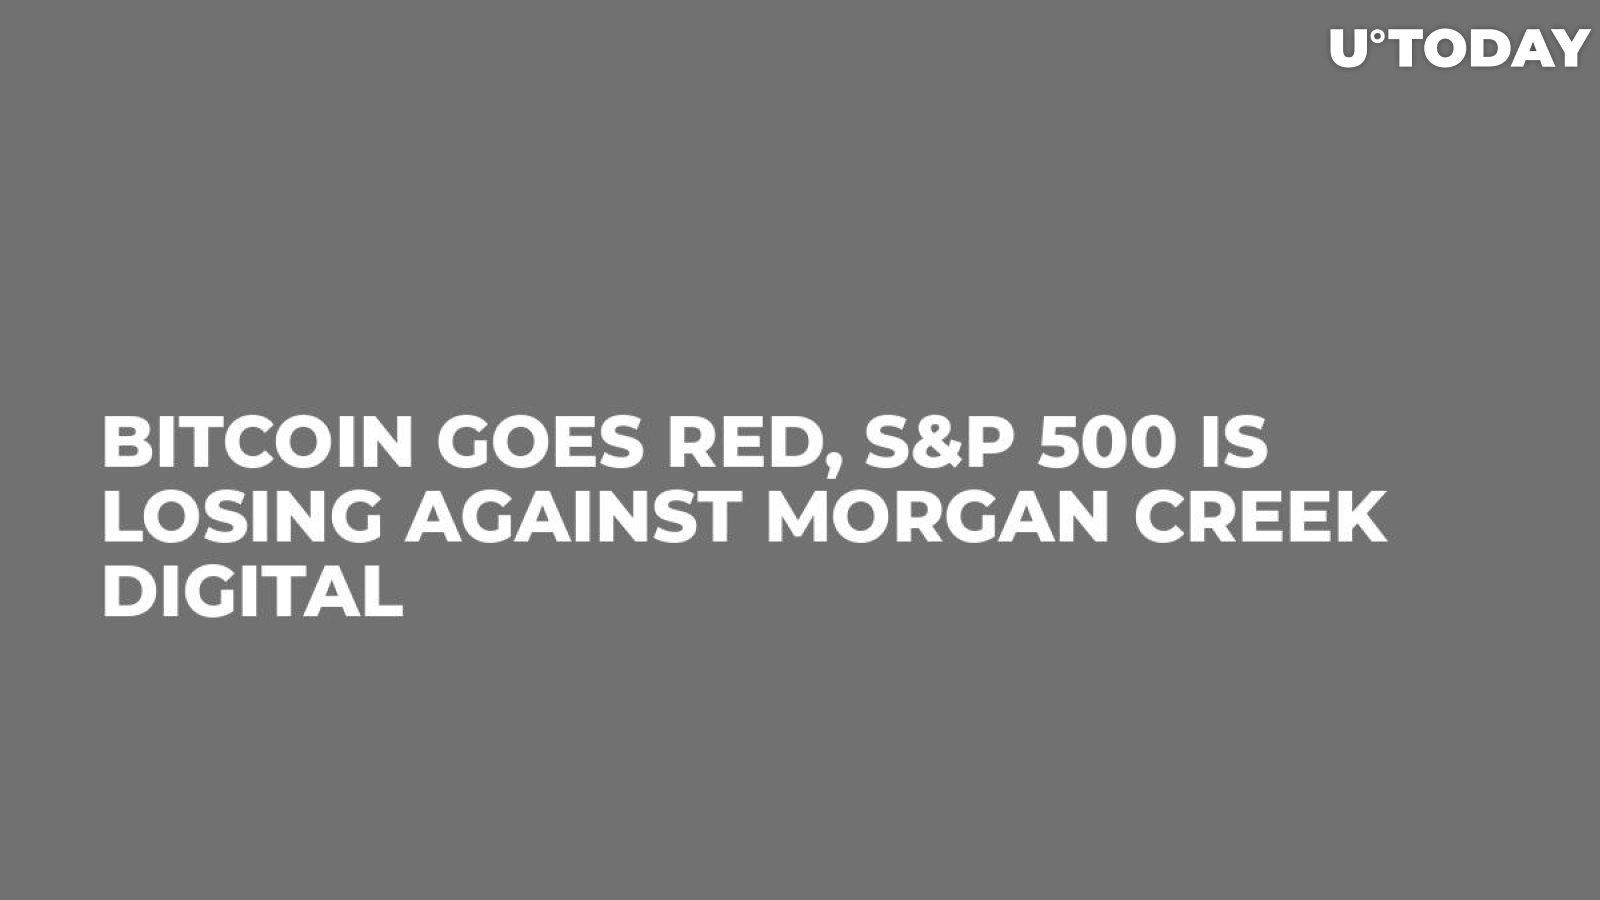 Bitcoin Goes Red, S&P 500 is Losing Against Morgan Creek Digital